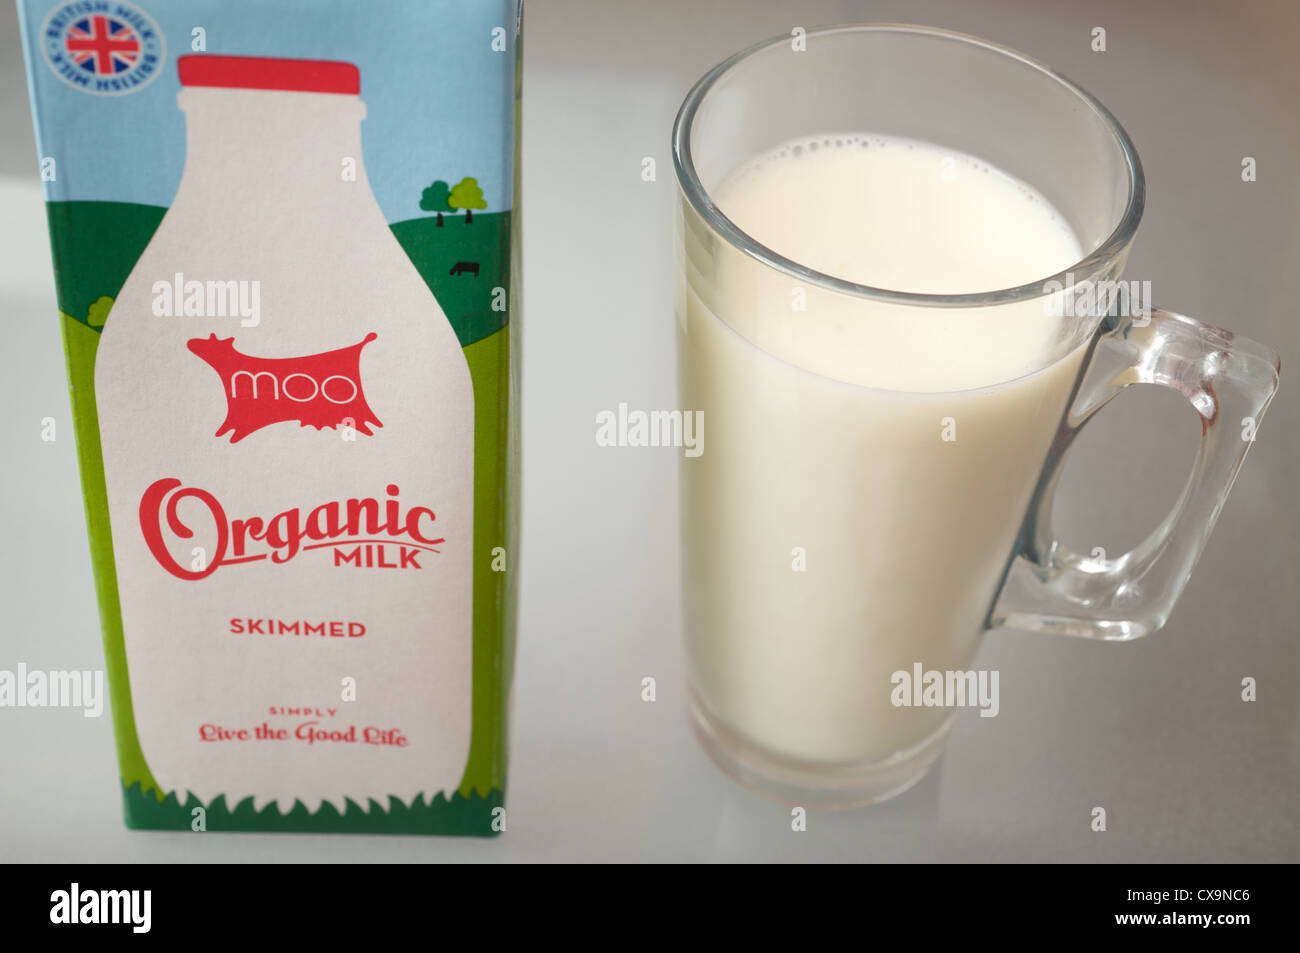 Moo organic skimmed milk Stock Photo